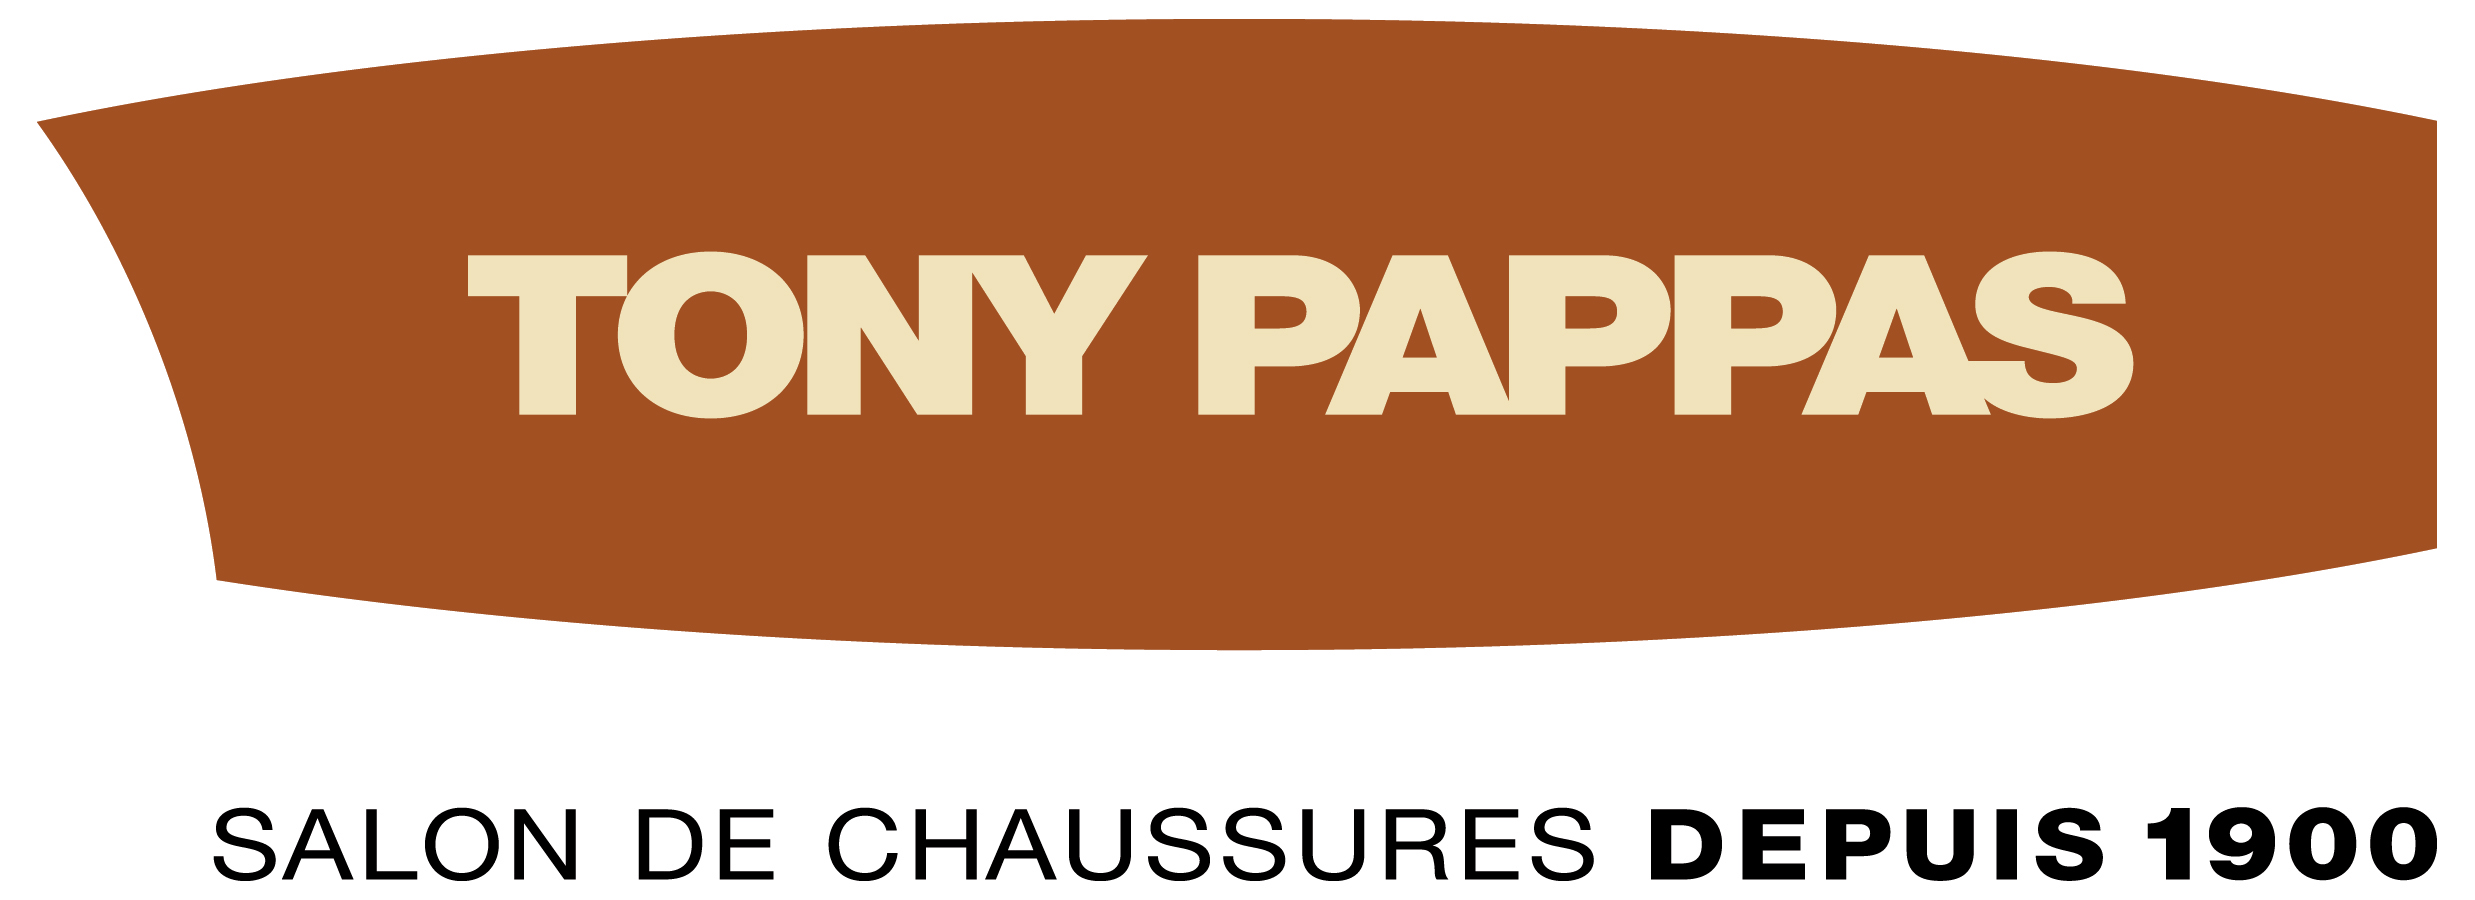 Tony Pappas - Footwear store - Tony Pappas - Footwear store